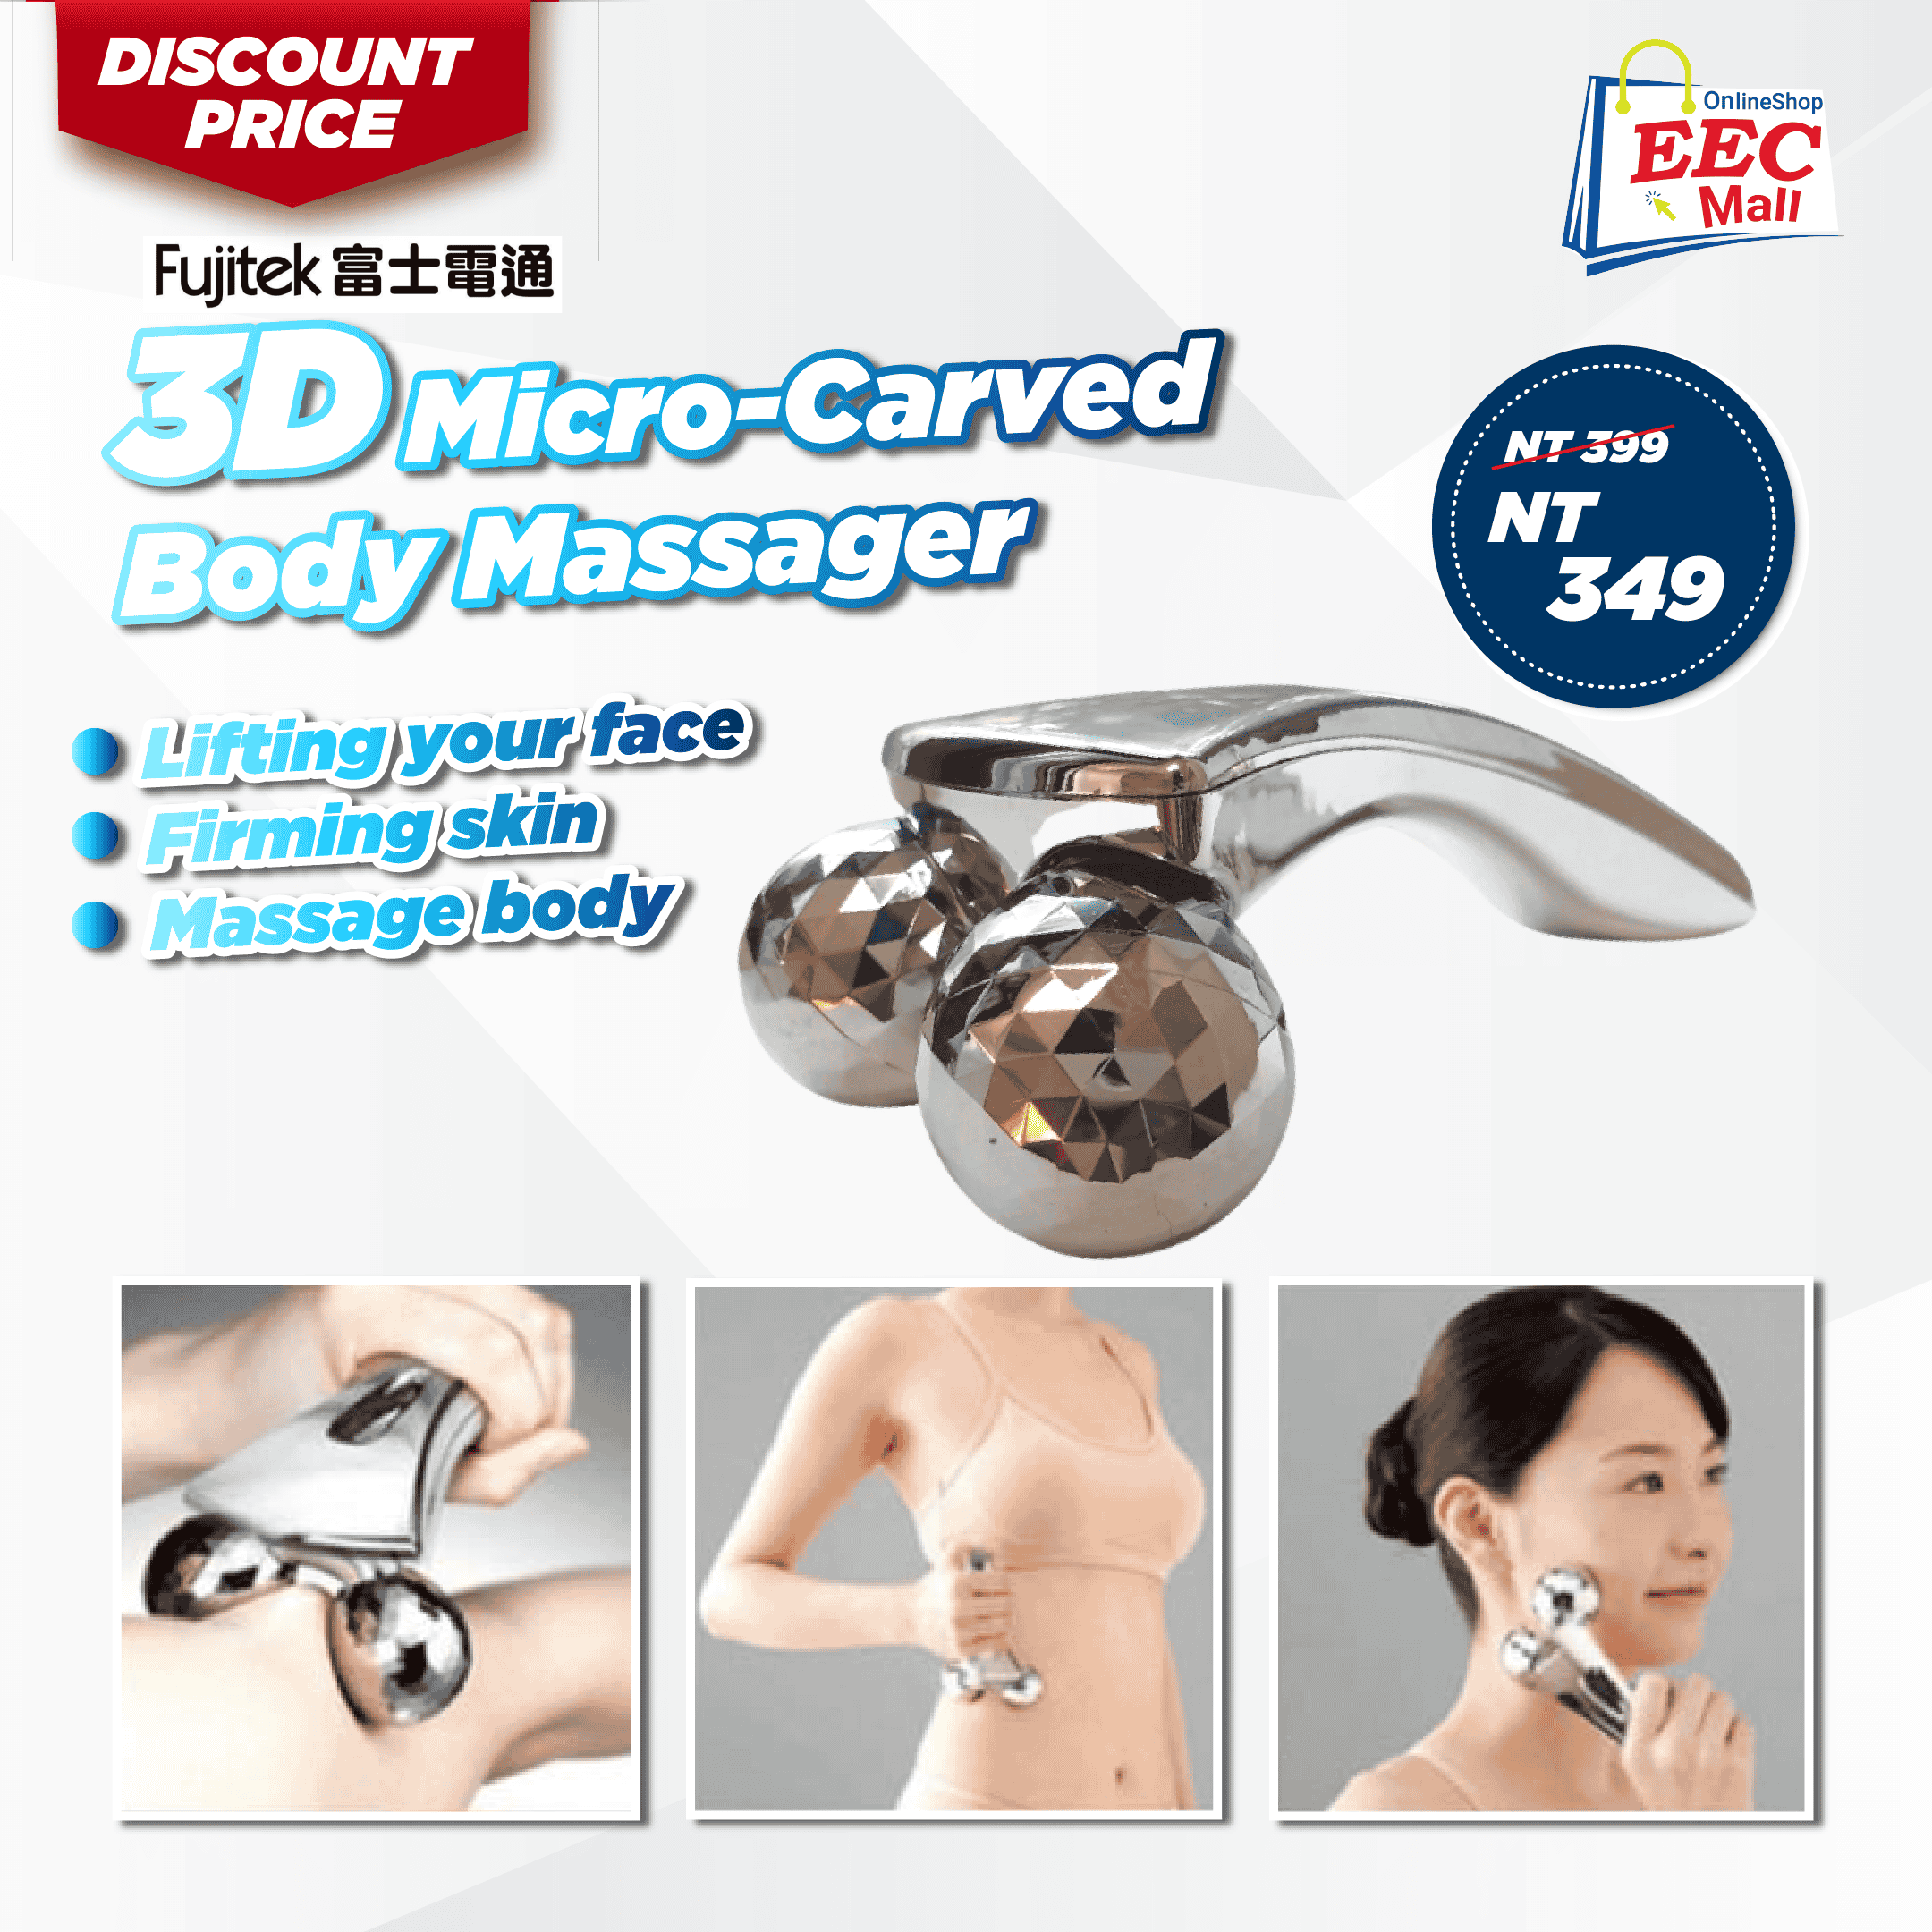 FUJITEK 3D Micro-Carved Body Massager